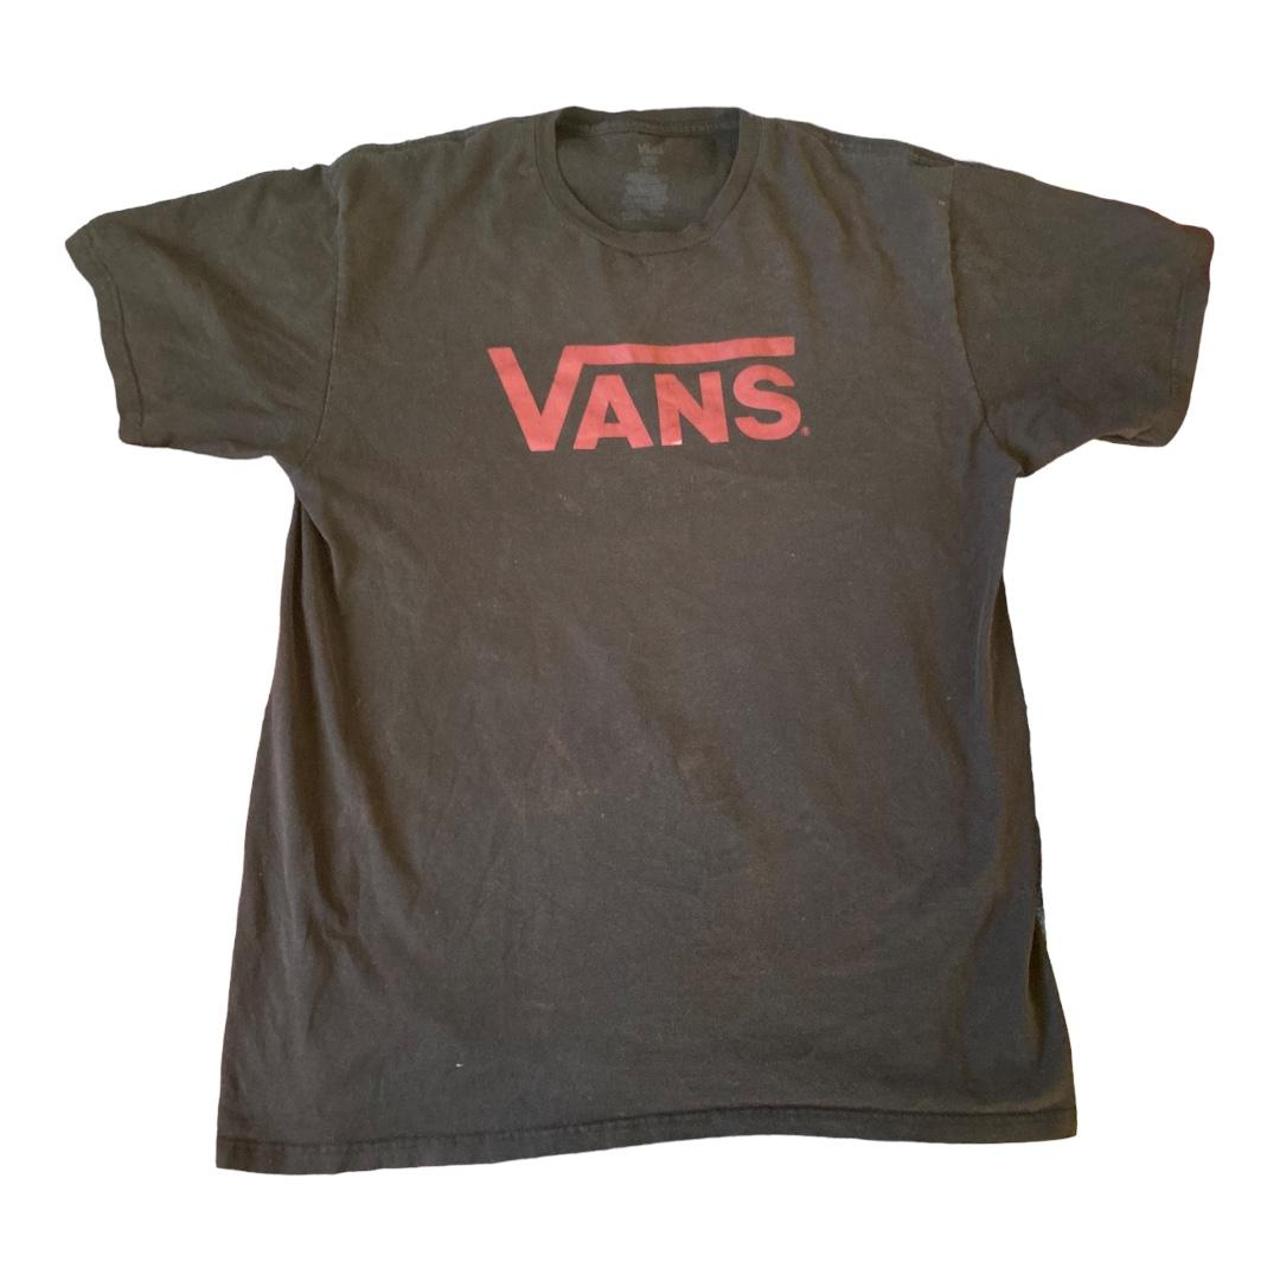 Vans classic logo T-shirt size Large #vans #skater... - Depop